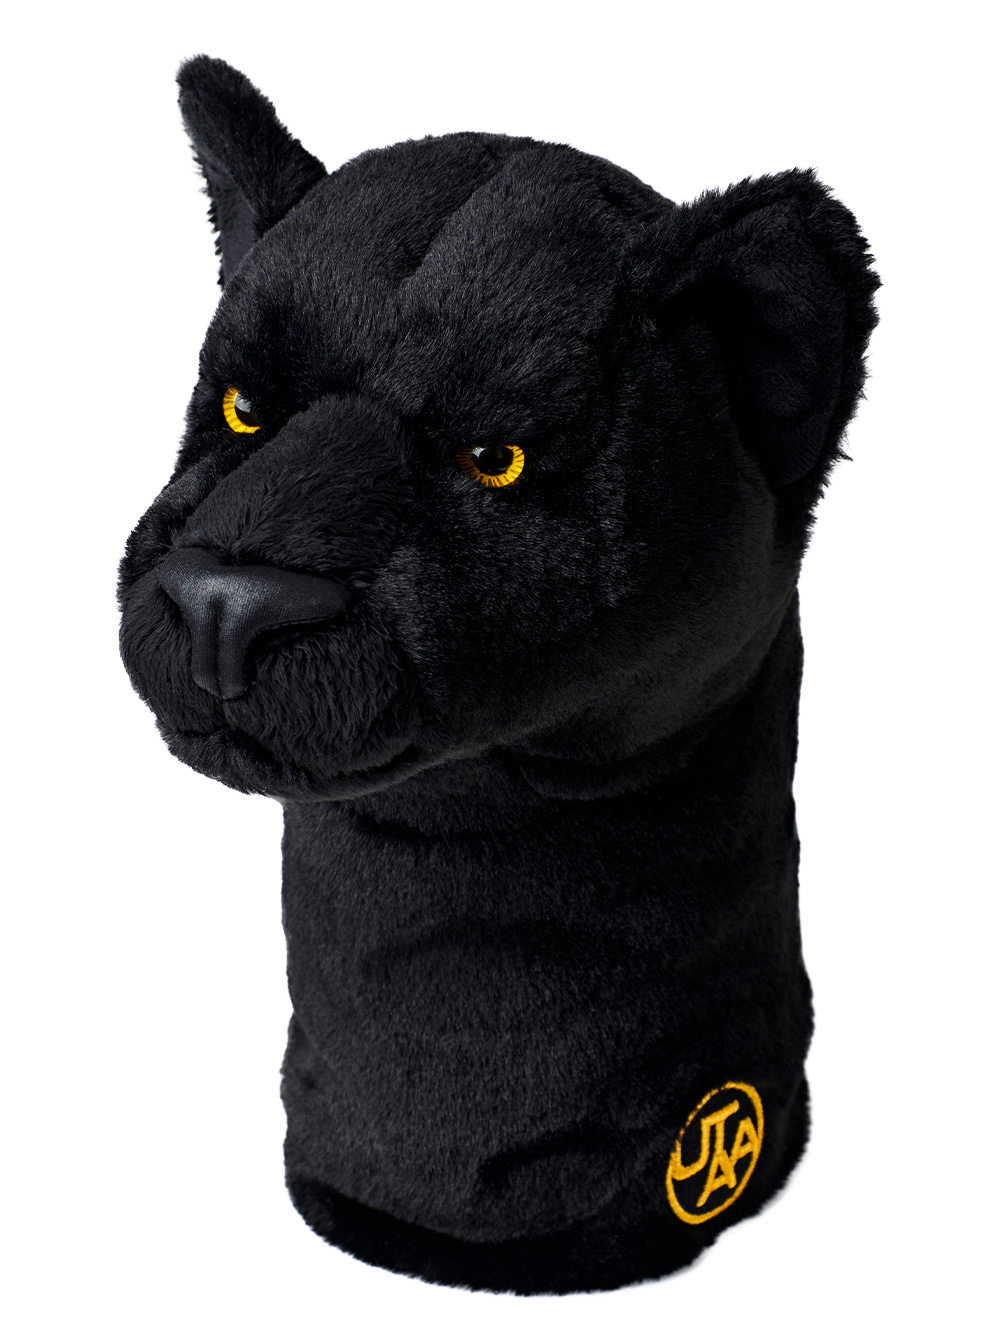 UTAA Panther Golf Driver Headcover : Black (UC0GXU410BK)